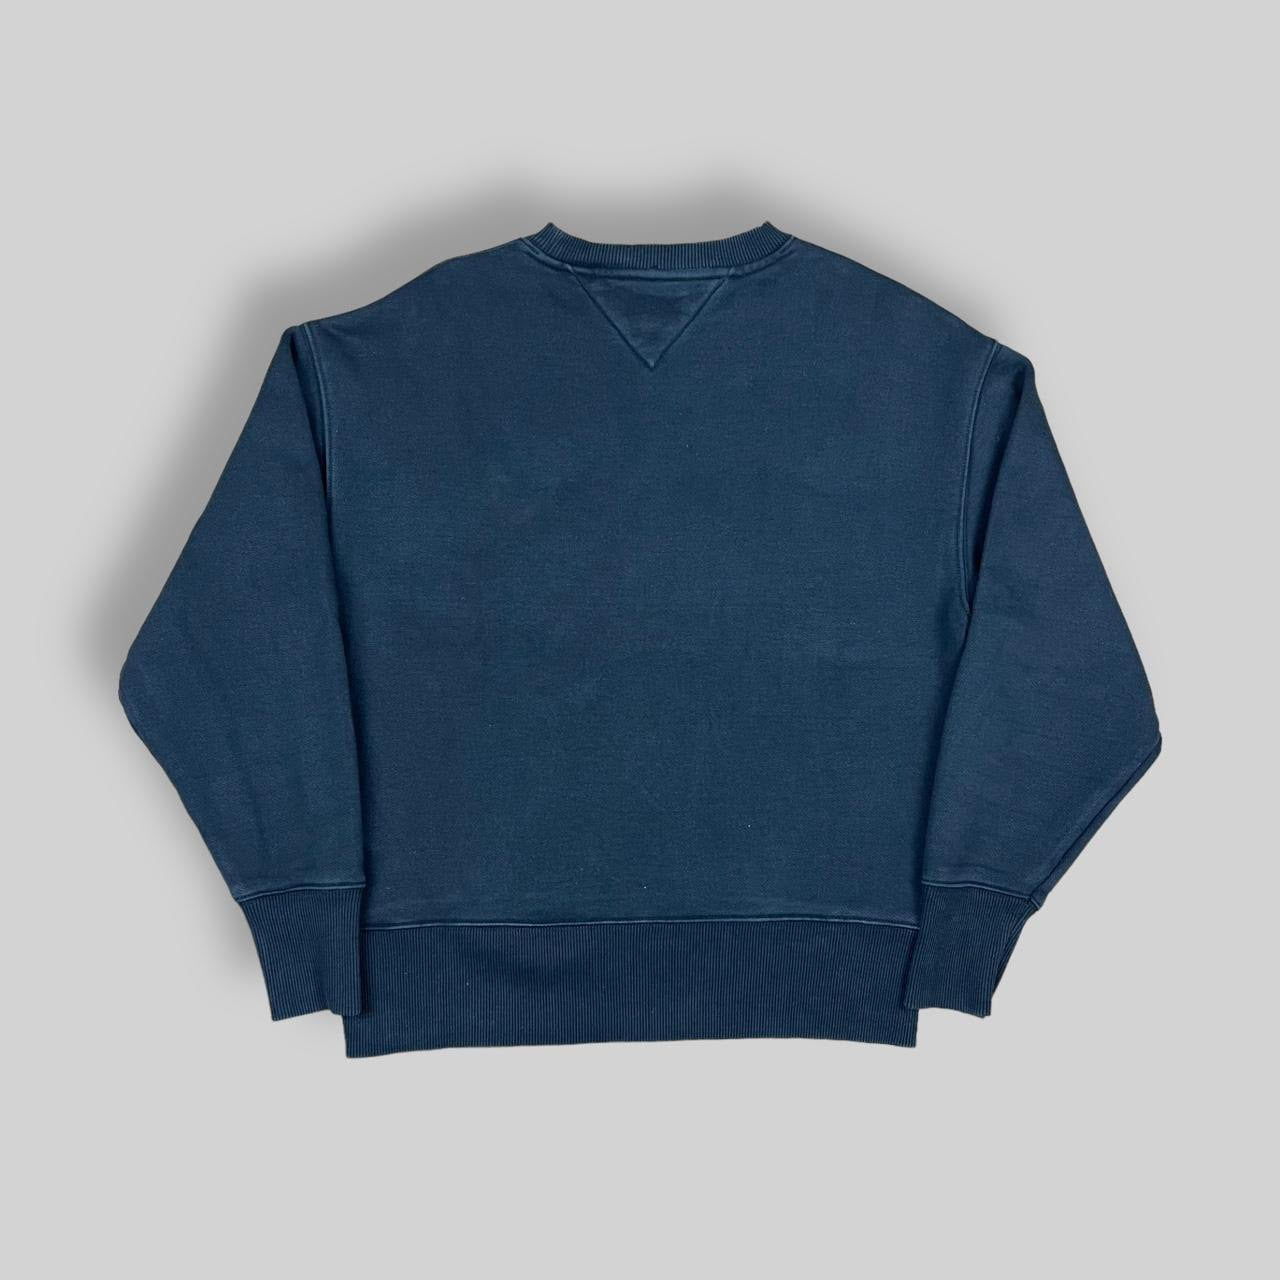 Tommy Jeans Spellout Sweatshirt (XS)